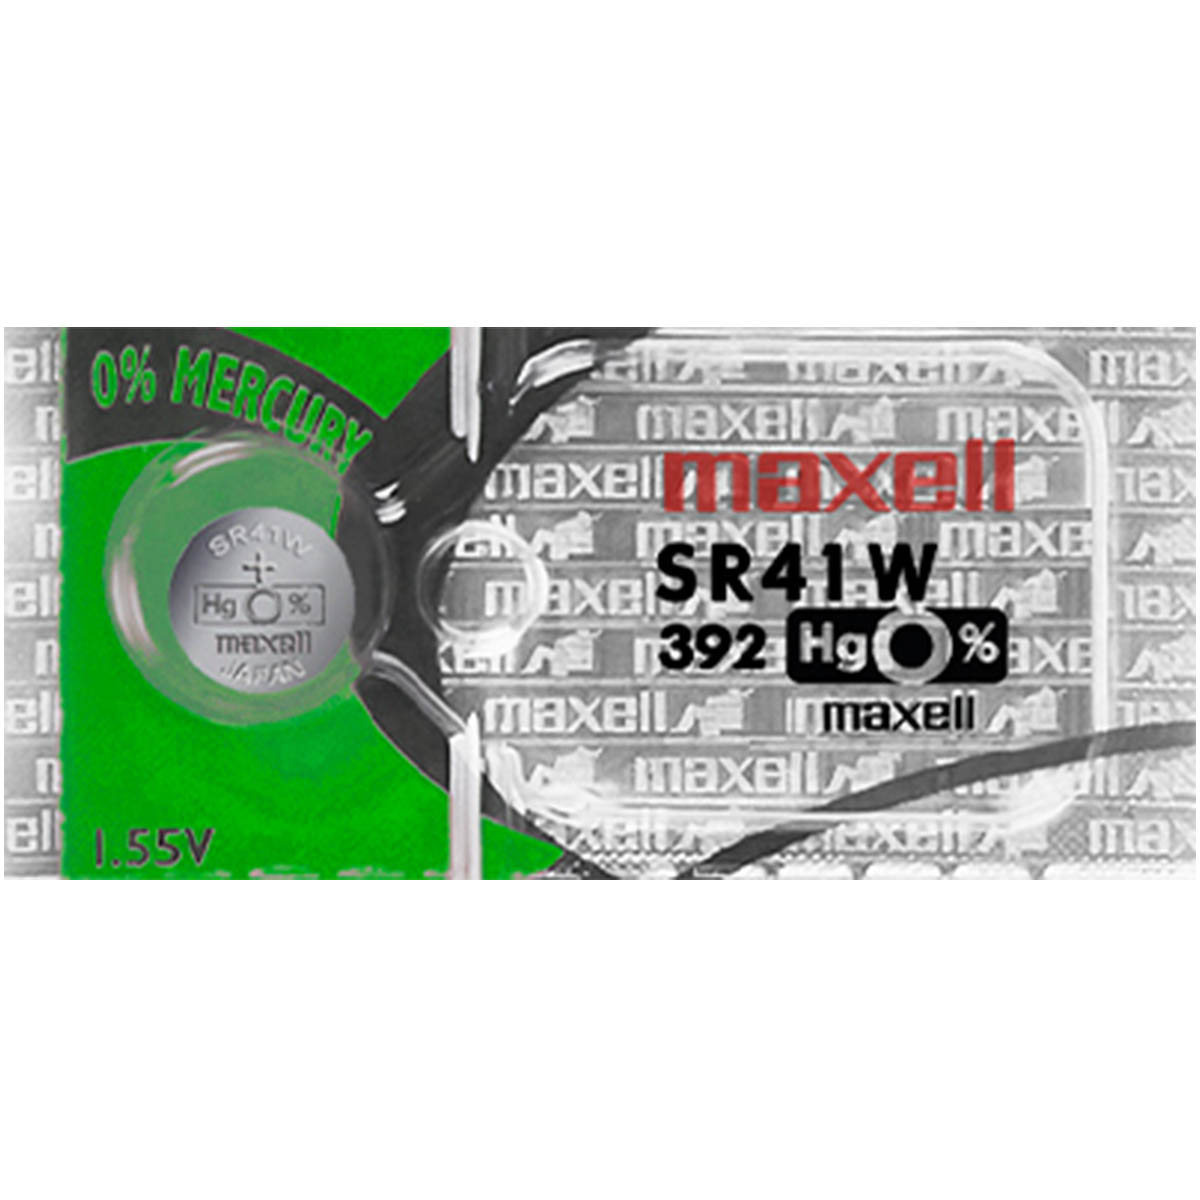 Maxell 392 Watch Battery (SR41W ) Silver Oxide 1.55V